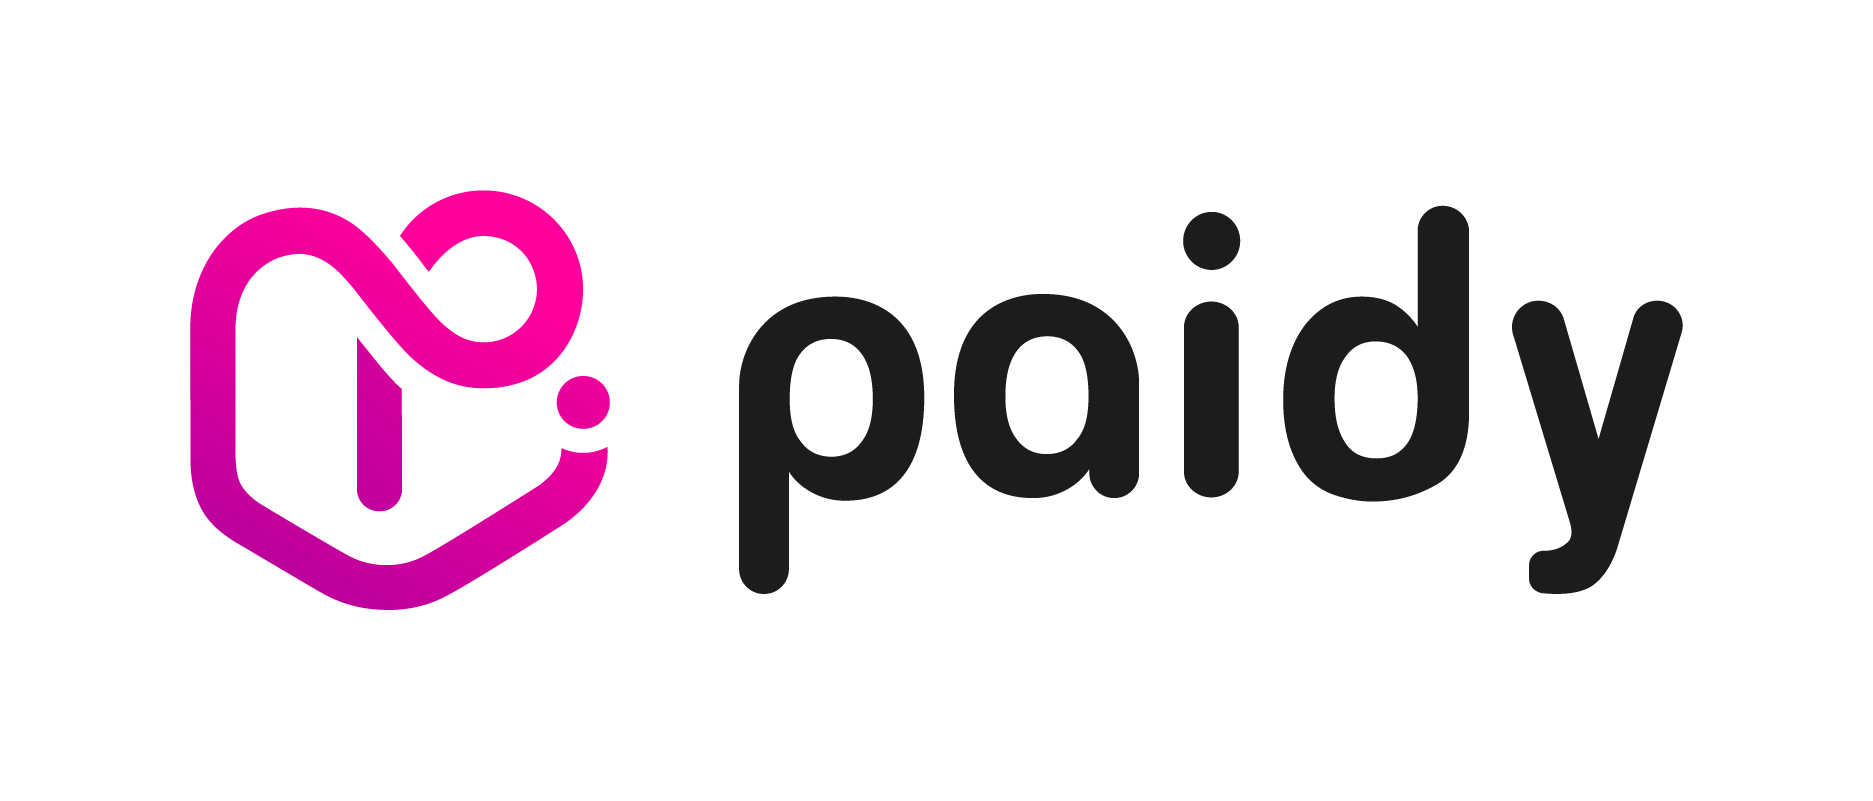 Paidy logo